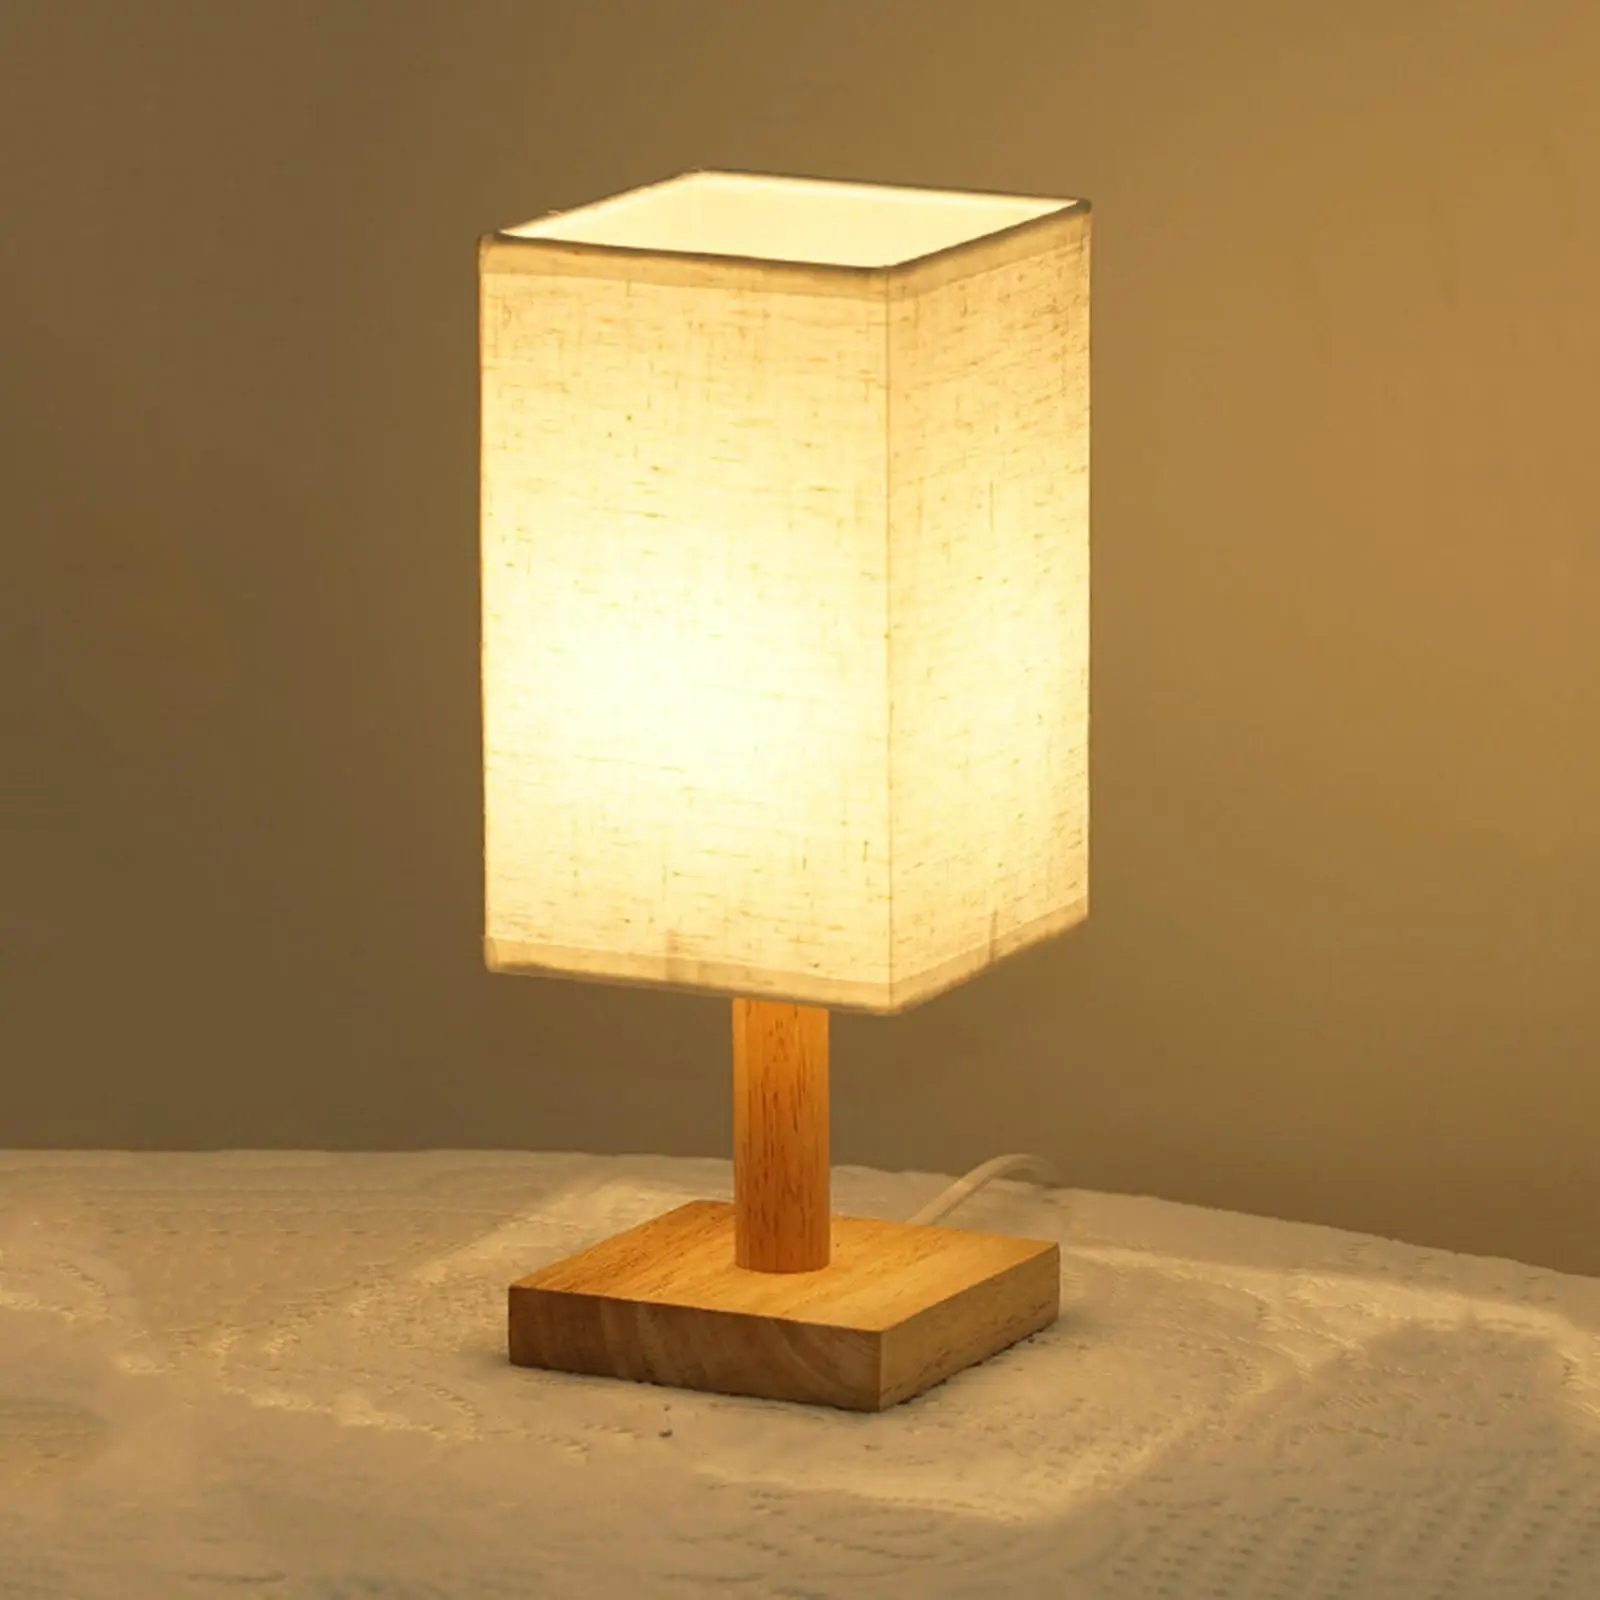 Minimalist Bedside Table Lamp Night Light USB Powered Small Nightstand Lamp